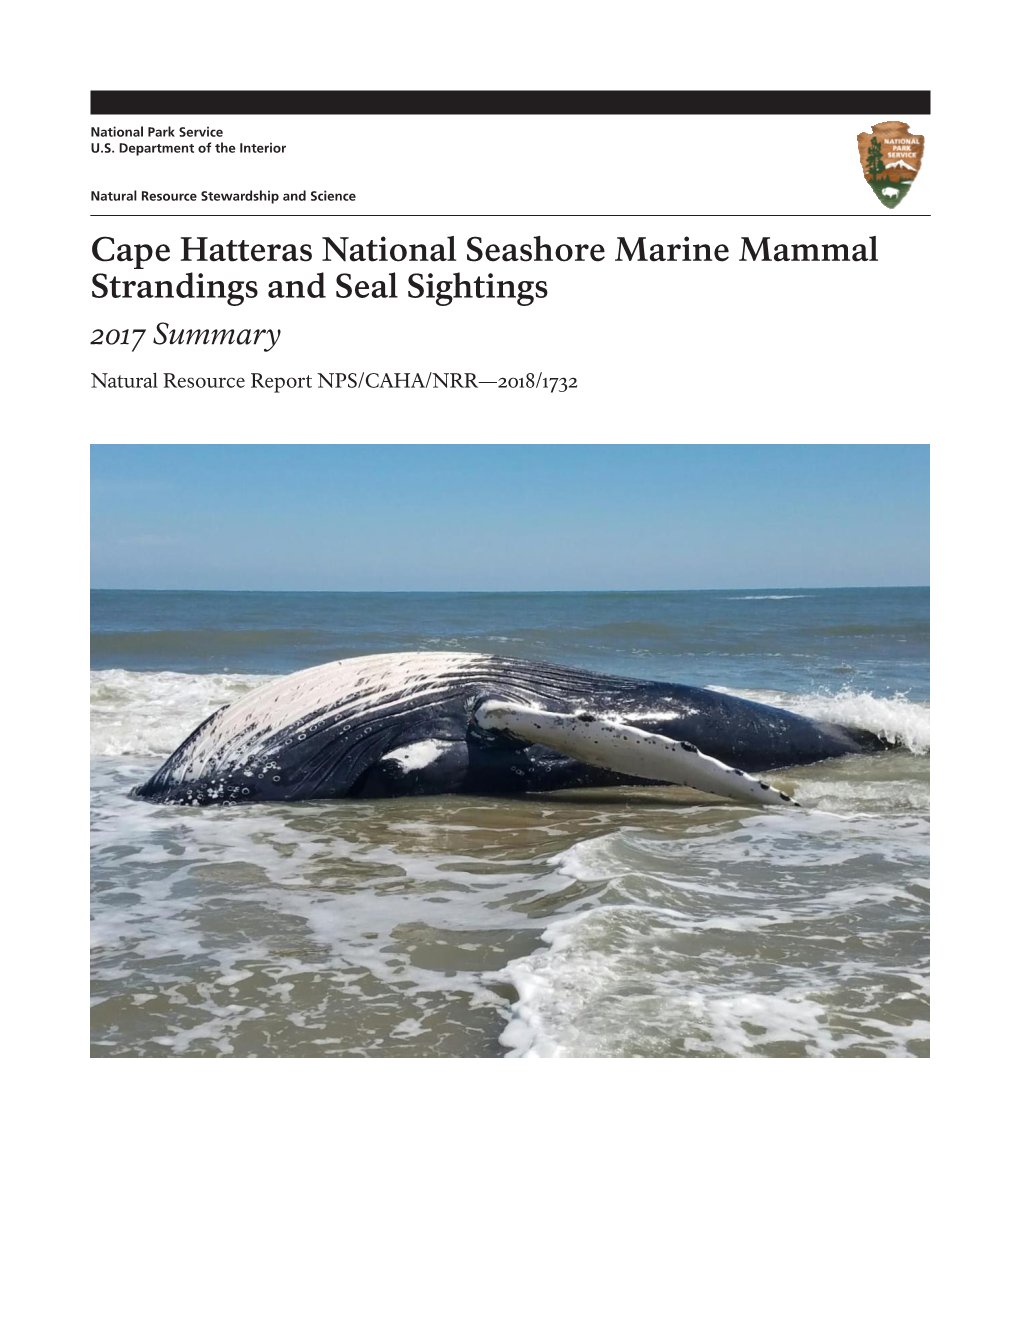 Cape Hatteras National Seashore Marine Mammal Strandings and Seal Sightings 2017 Summary